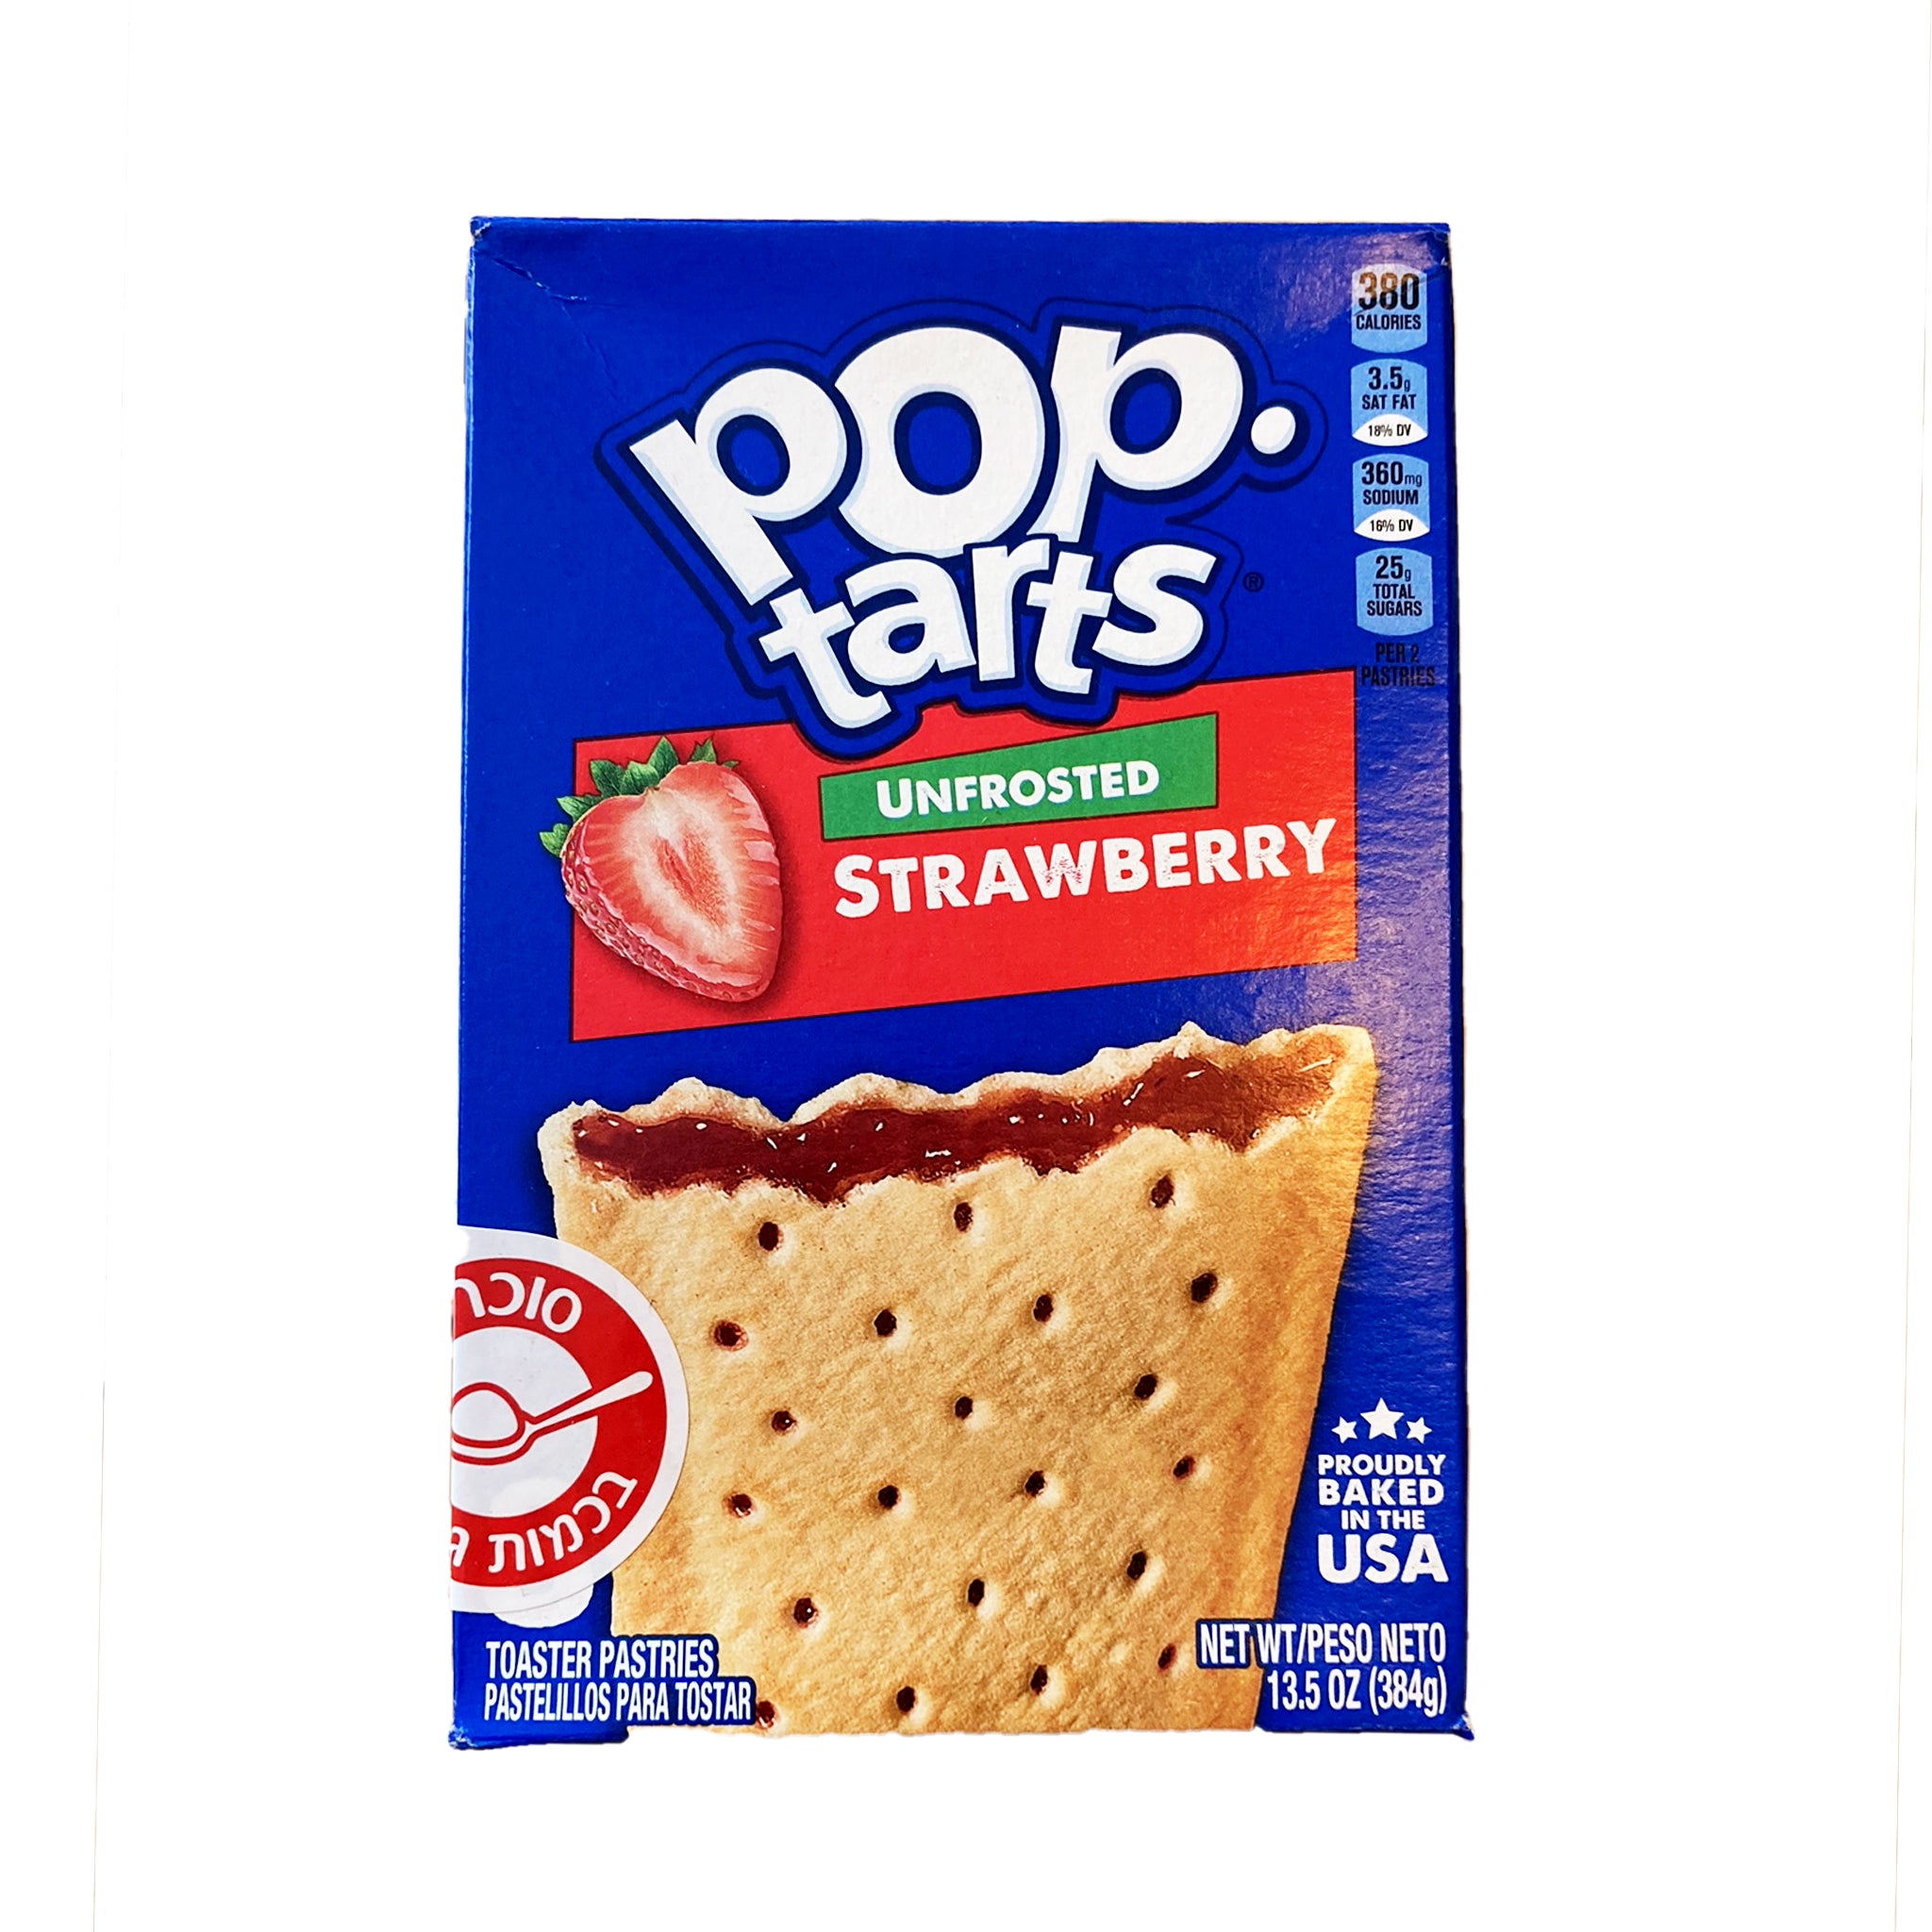 Pop Tarts Frosted Strawberry פופטארטס פרוסט תות טעימים